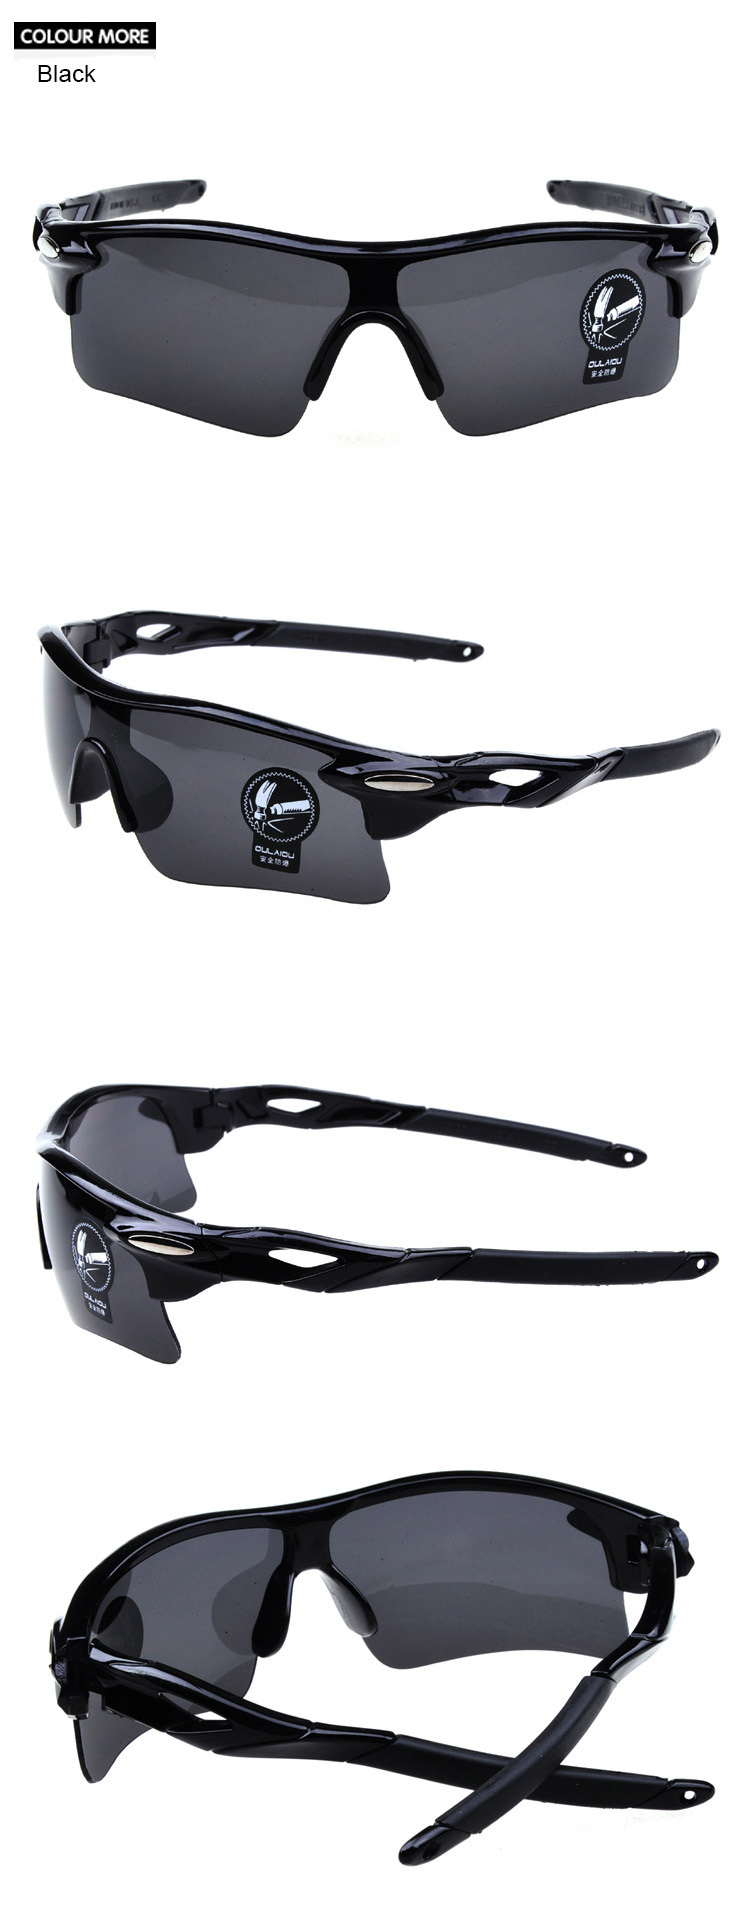 5 2014 Fashion Hot Men Women Sunglasses Unisex Dazzle Colour Cycling Bicycle Bike Sports Fishing Driving Skiing Sunglasses Oculos